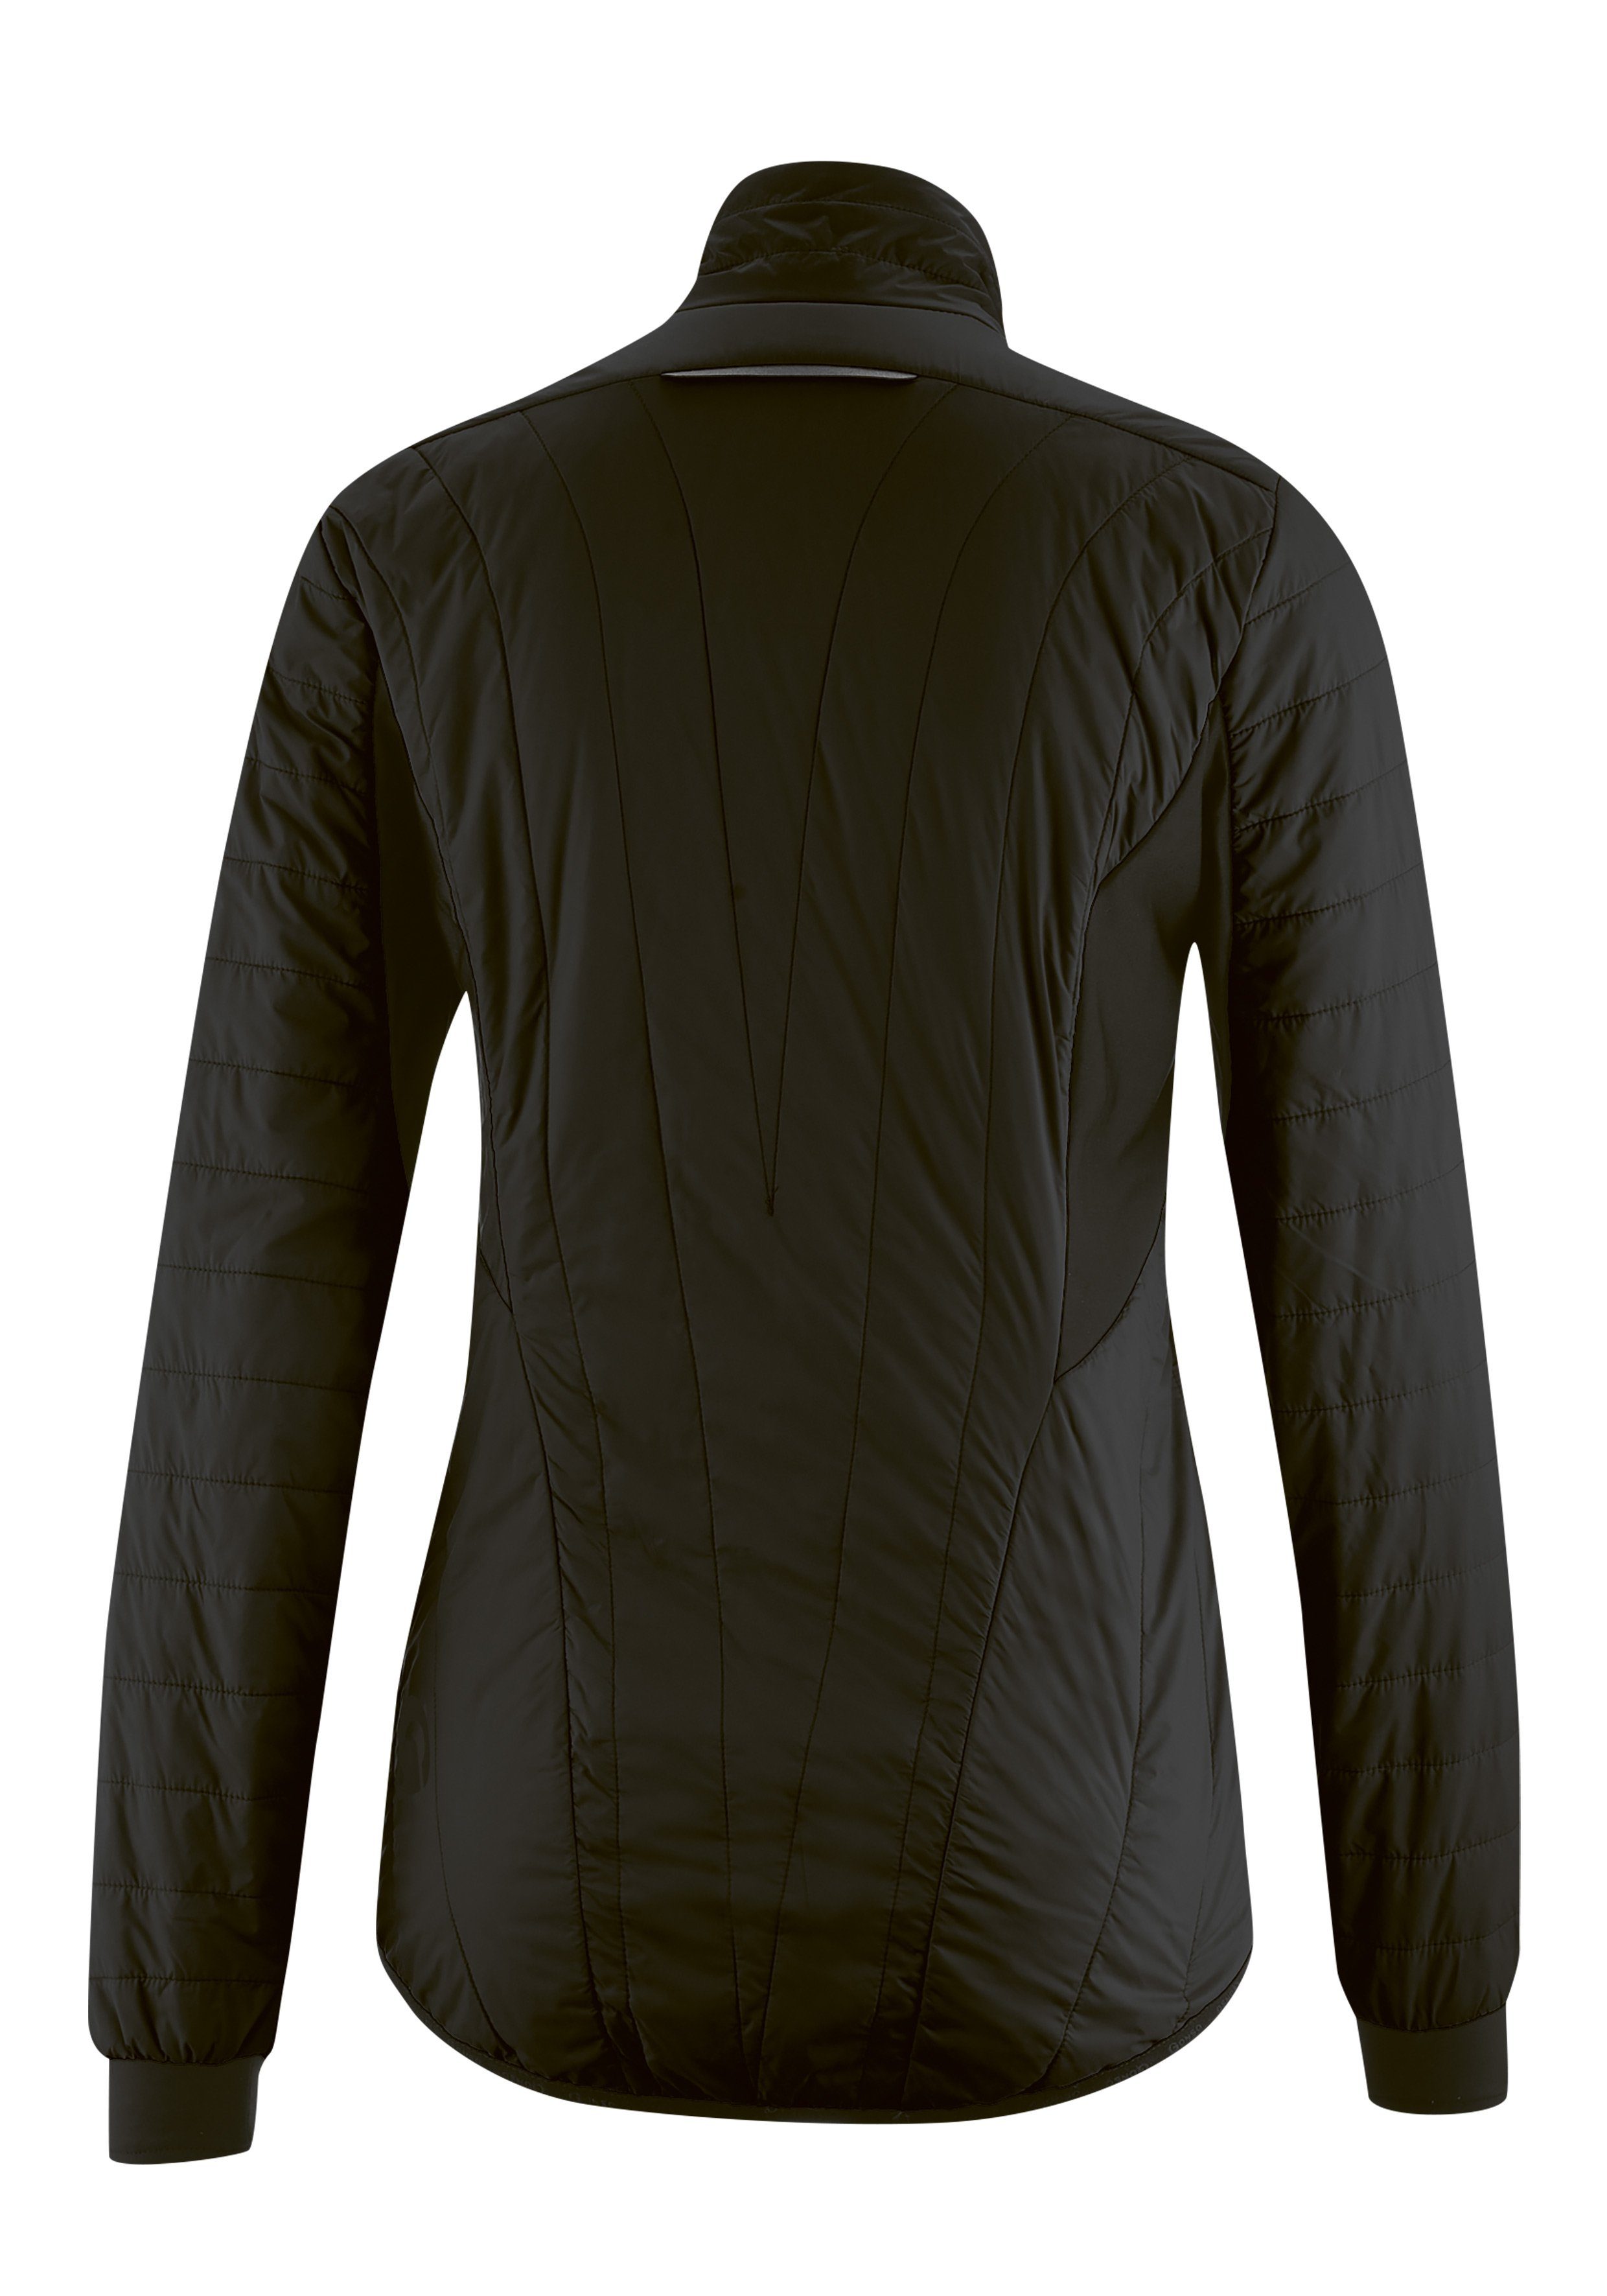 Gonso Fahrradjacke schwarz und Primaloft-Jacke, atmungsaktiv Damen warm, Teixeira winddicht